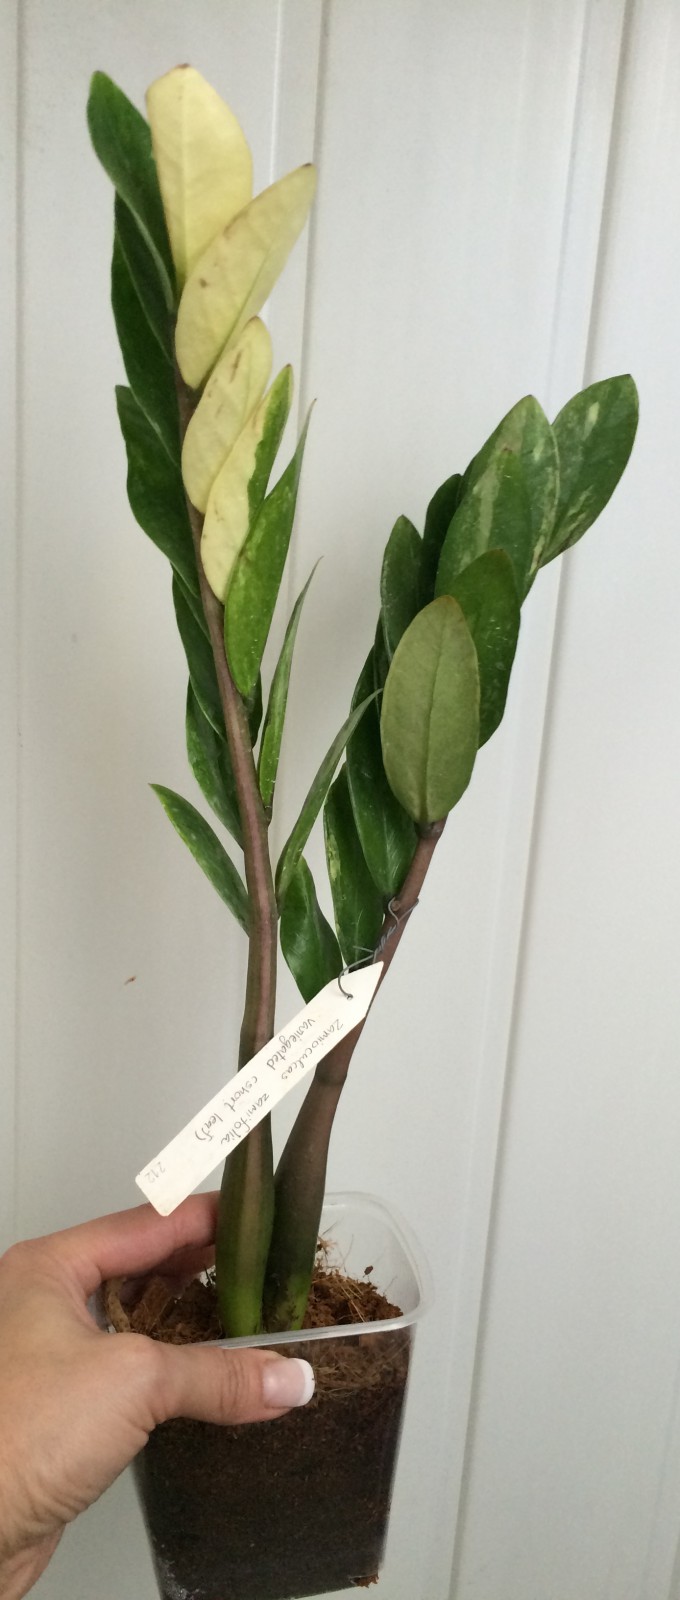 Zamioculcas zamifolia variegated (short leaf) / Замиокулькас замиелистный вариегатный, коротколистная форма 20-30-45-60